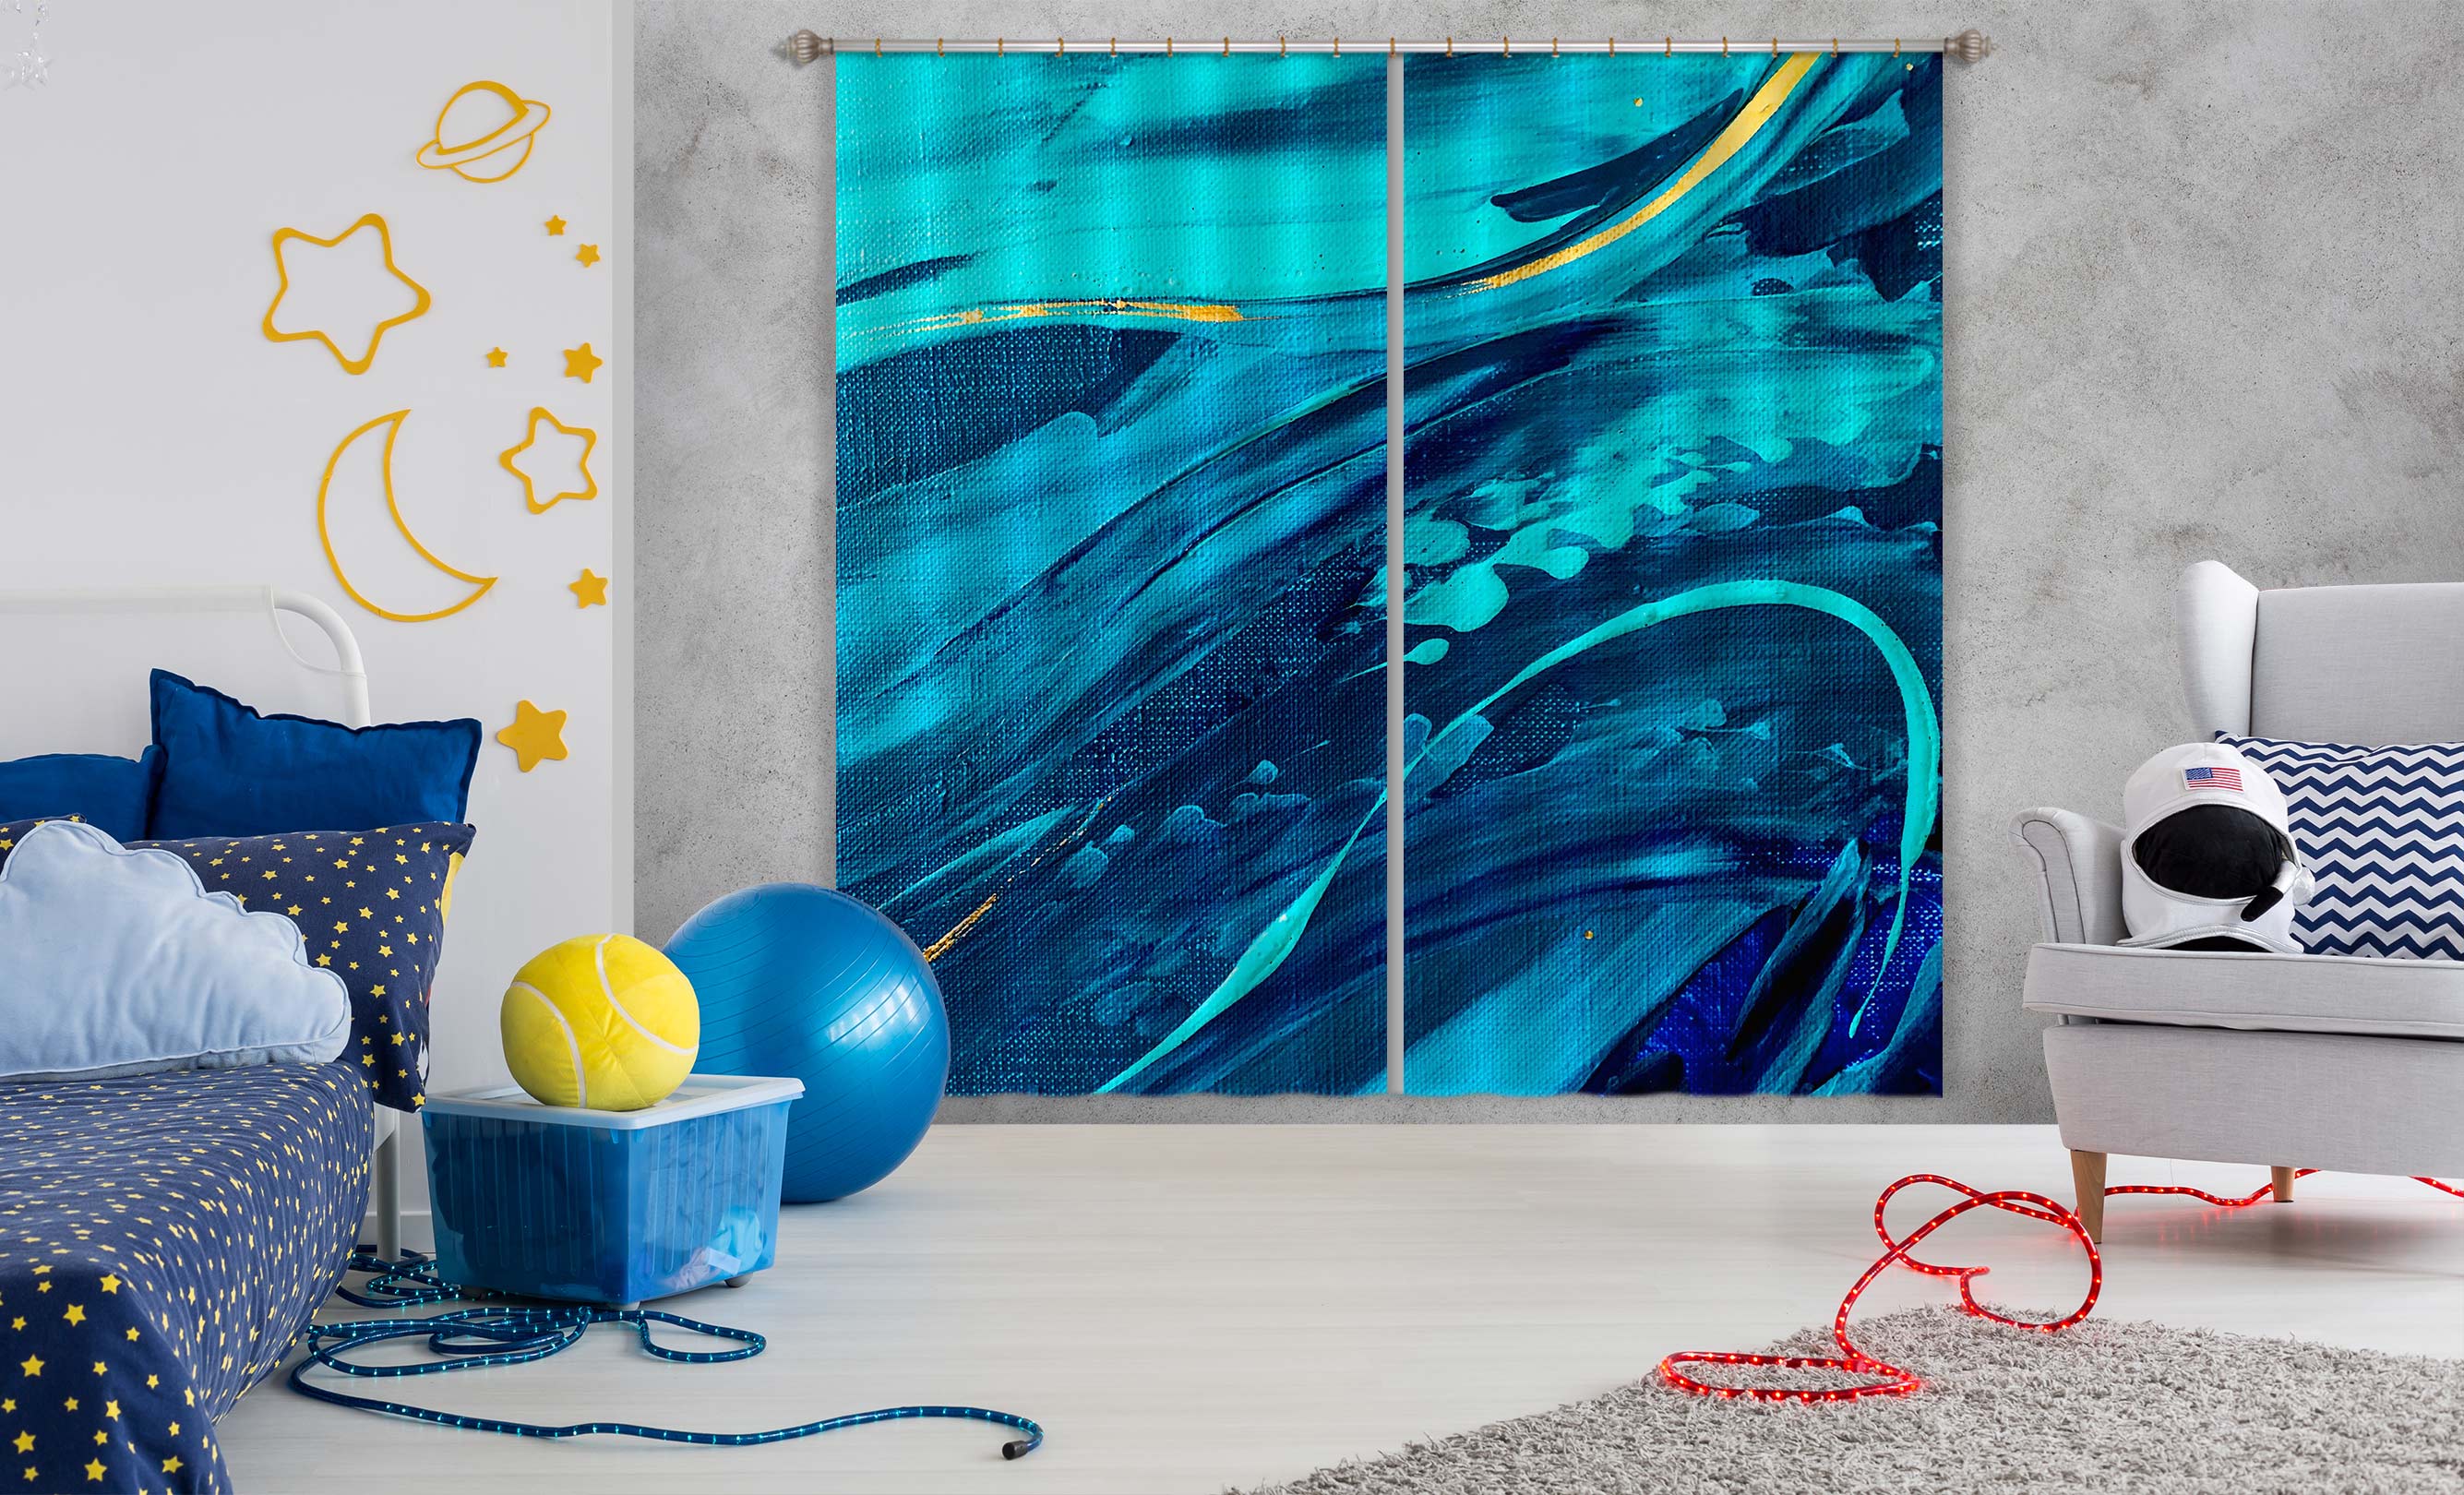 3D Blue Texture 337 Skromova Marina Curtain Curtains Drapes